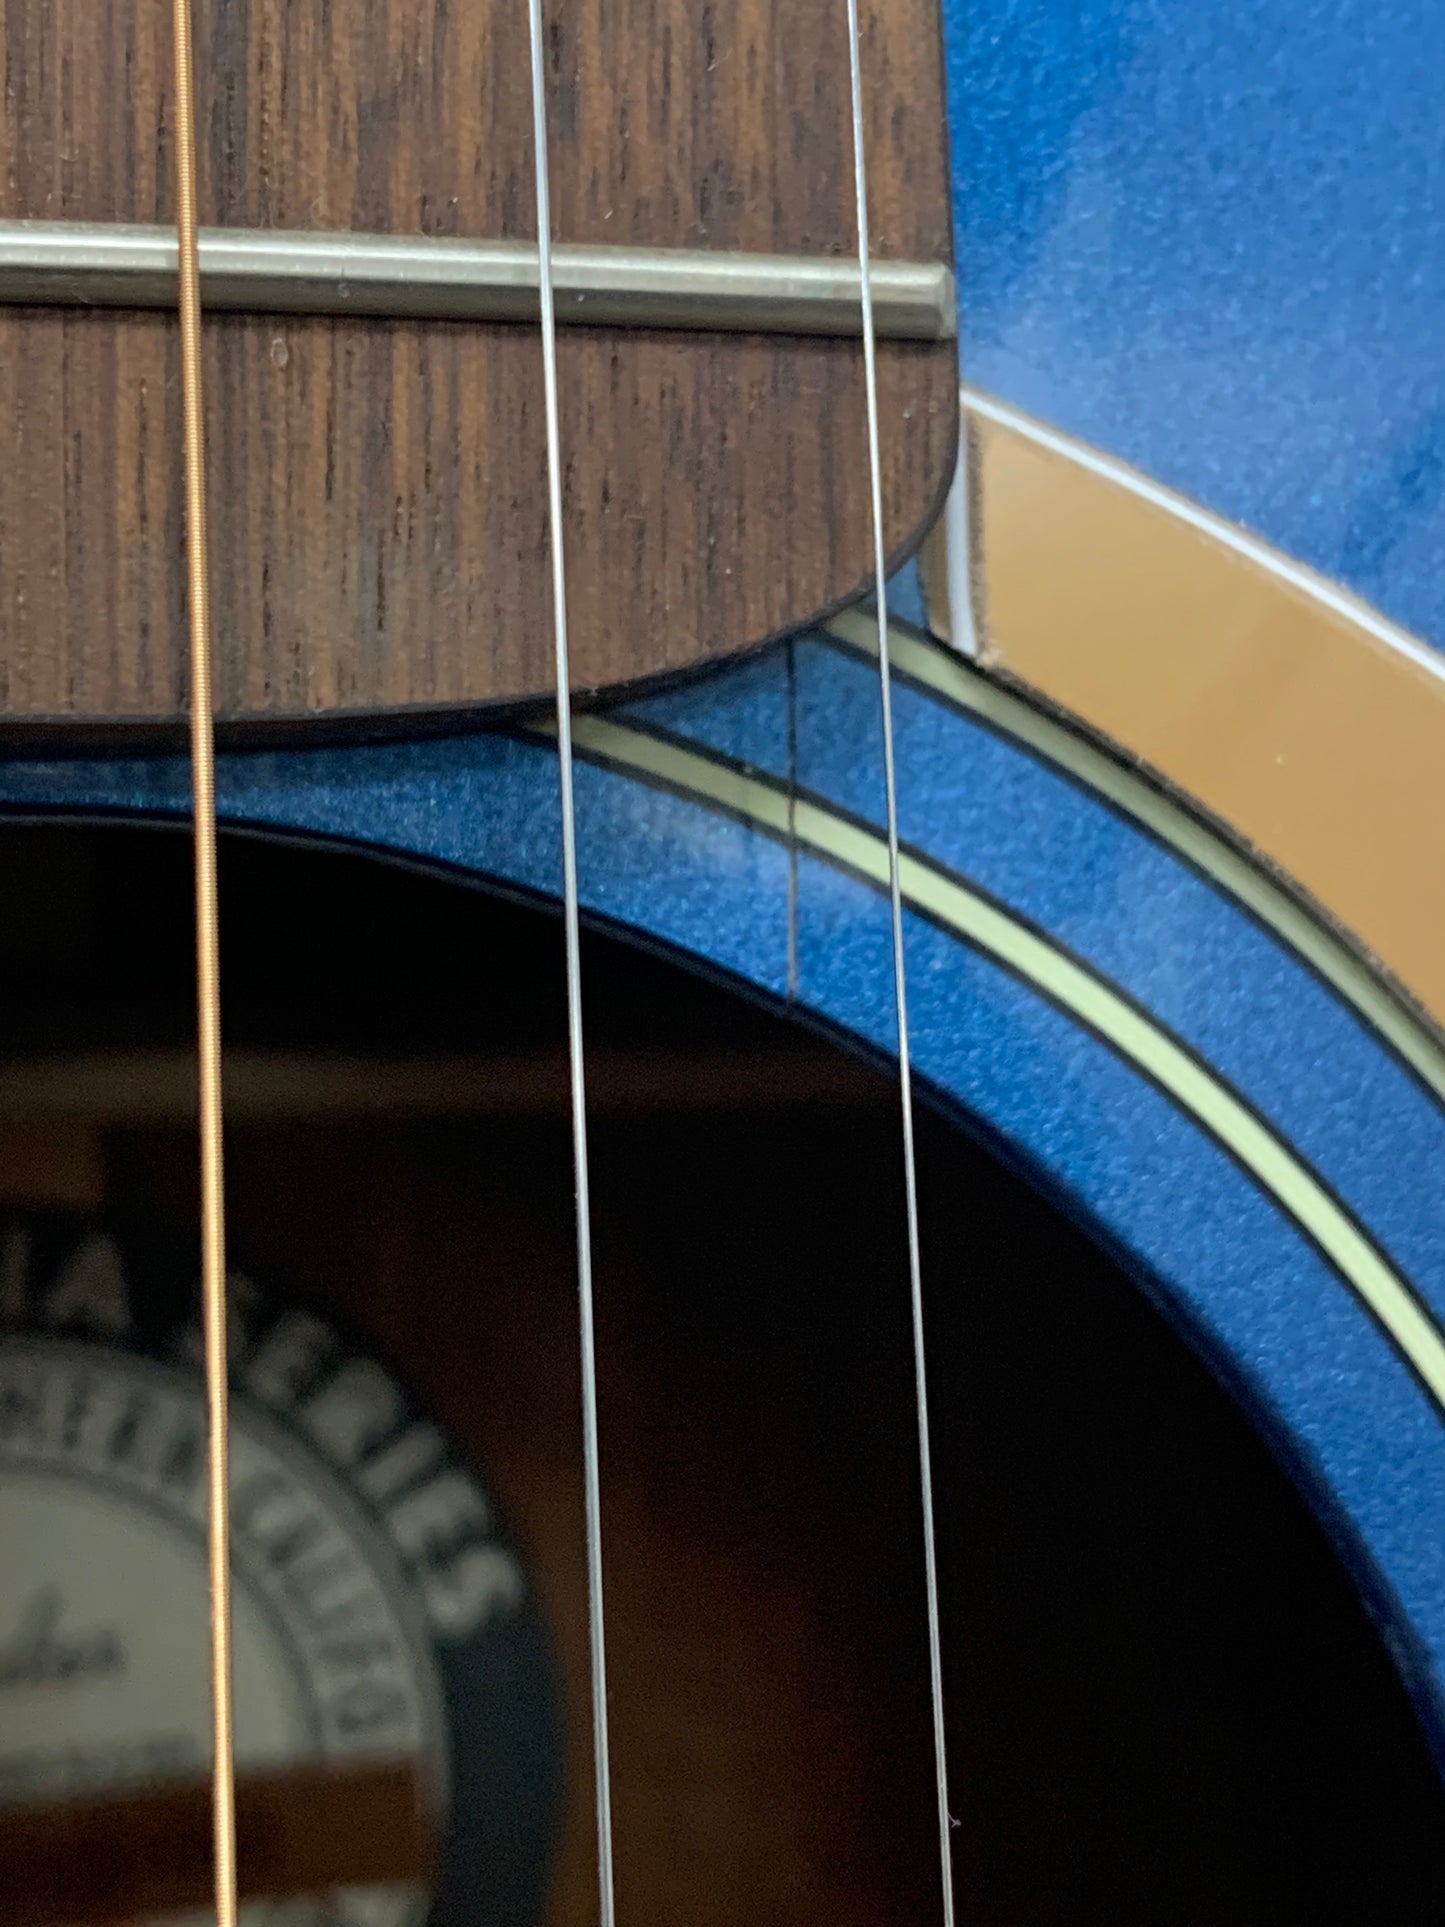 Fender California Series Redondo Player Acoustic Electric Guitar - Belmont Blue